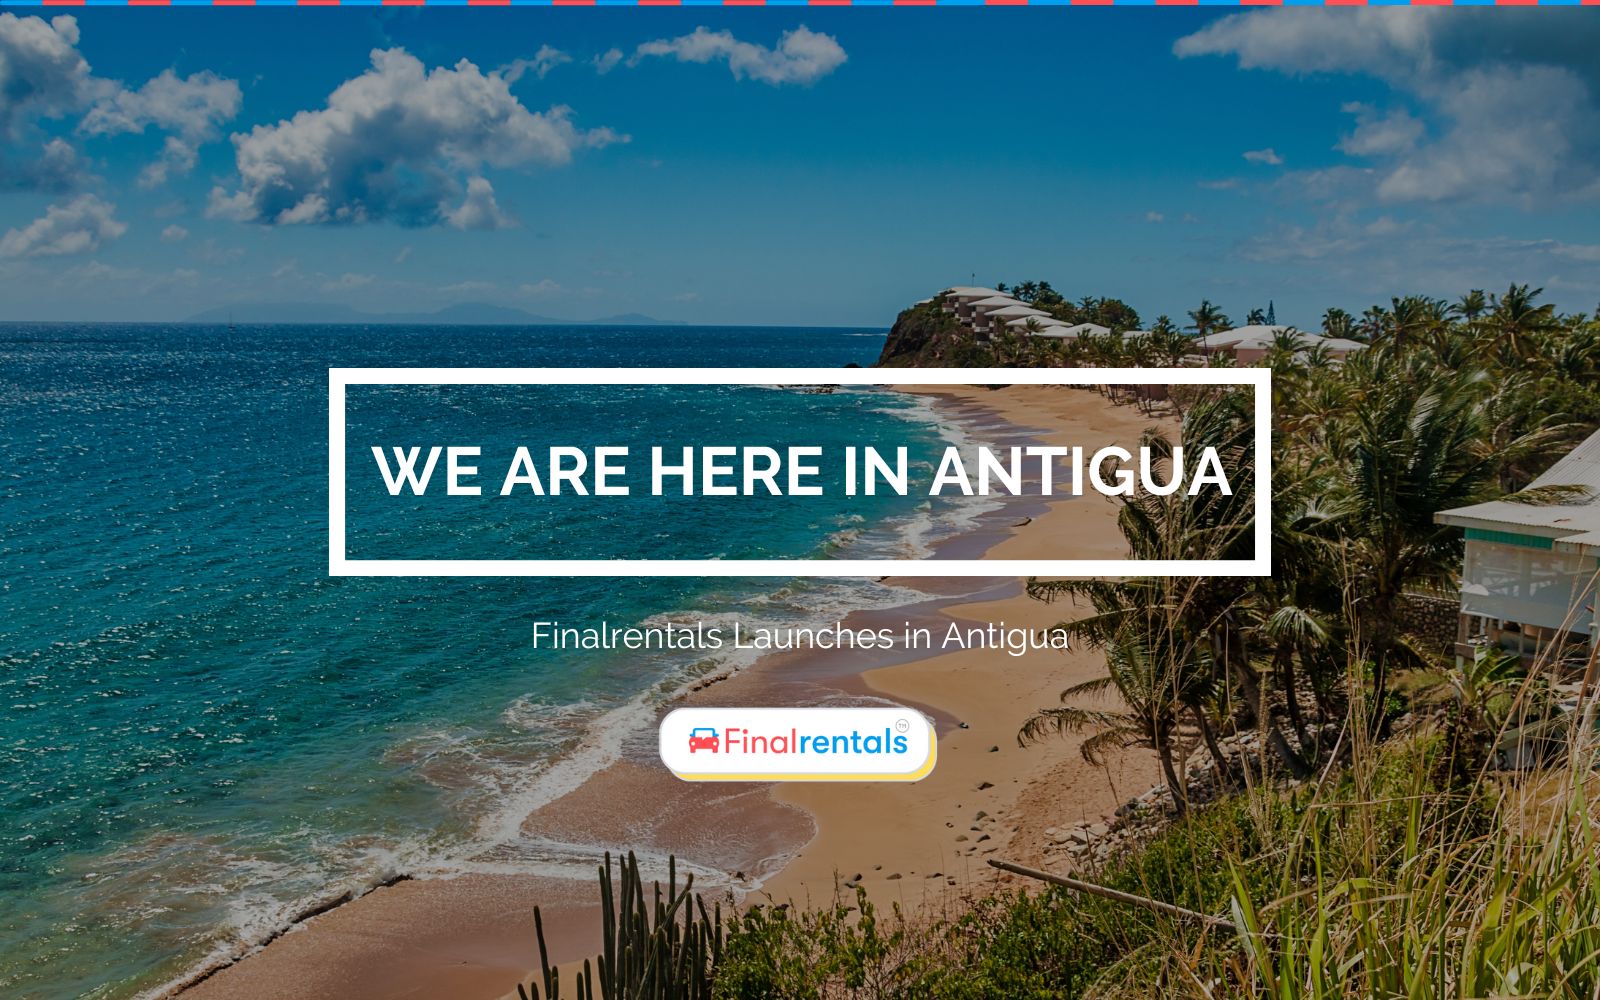 Finalrentals Launches in Antigua